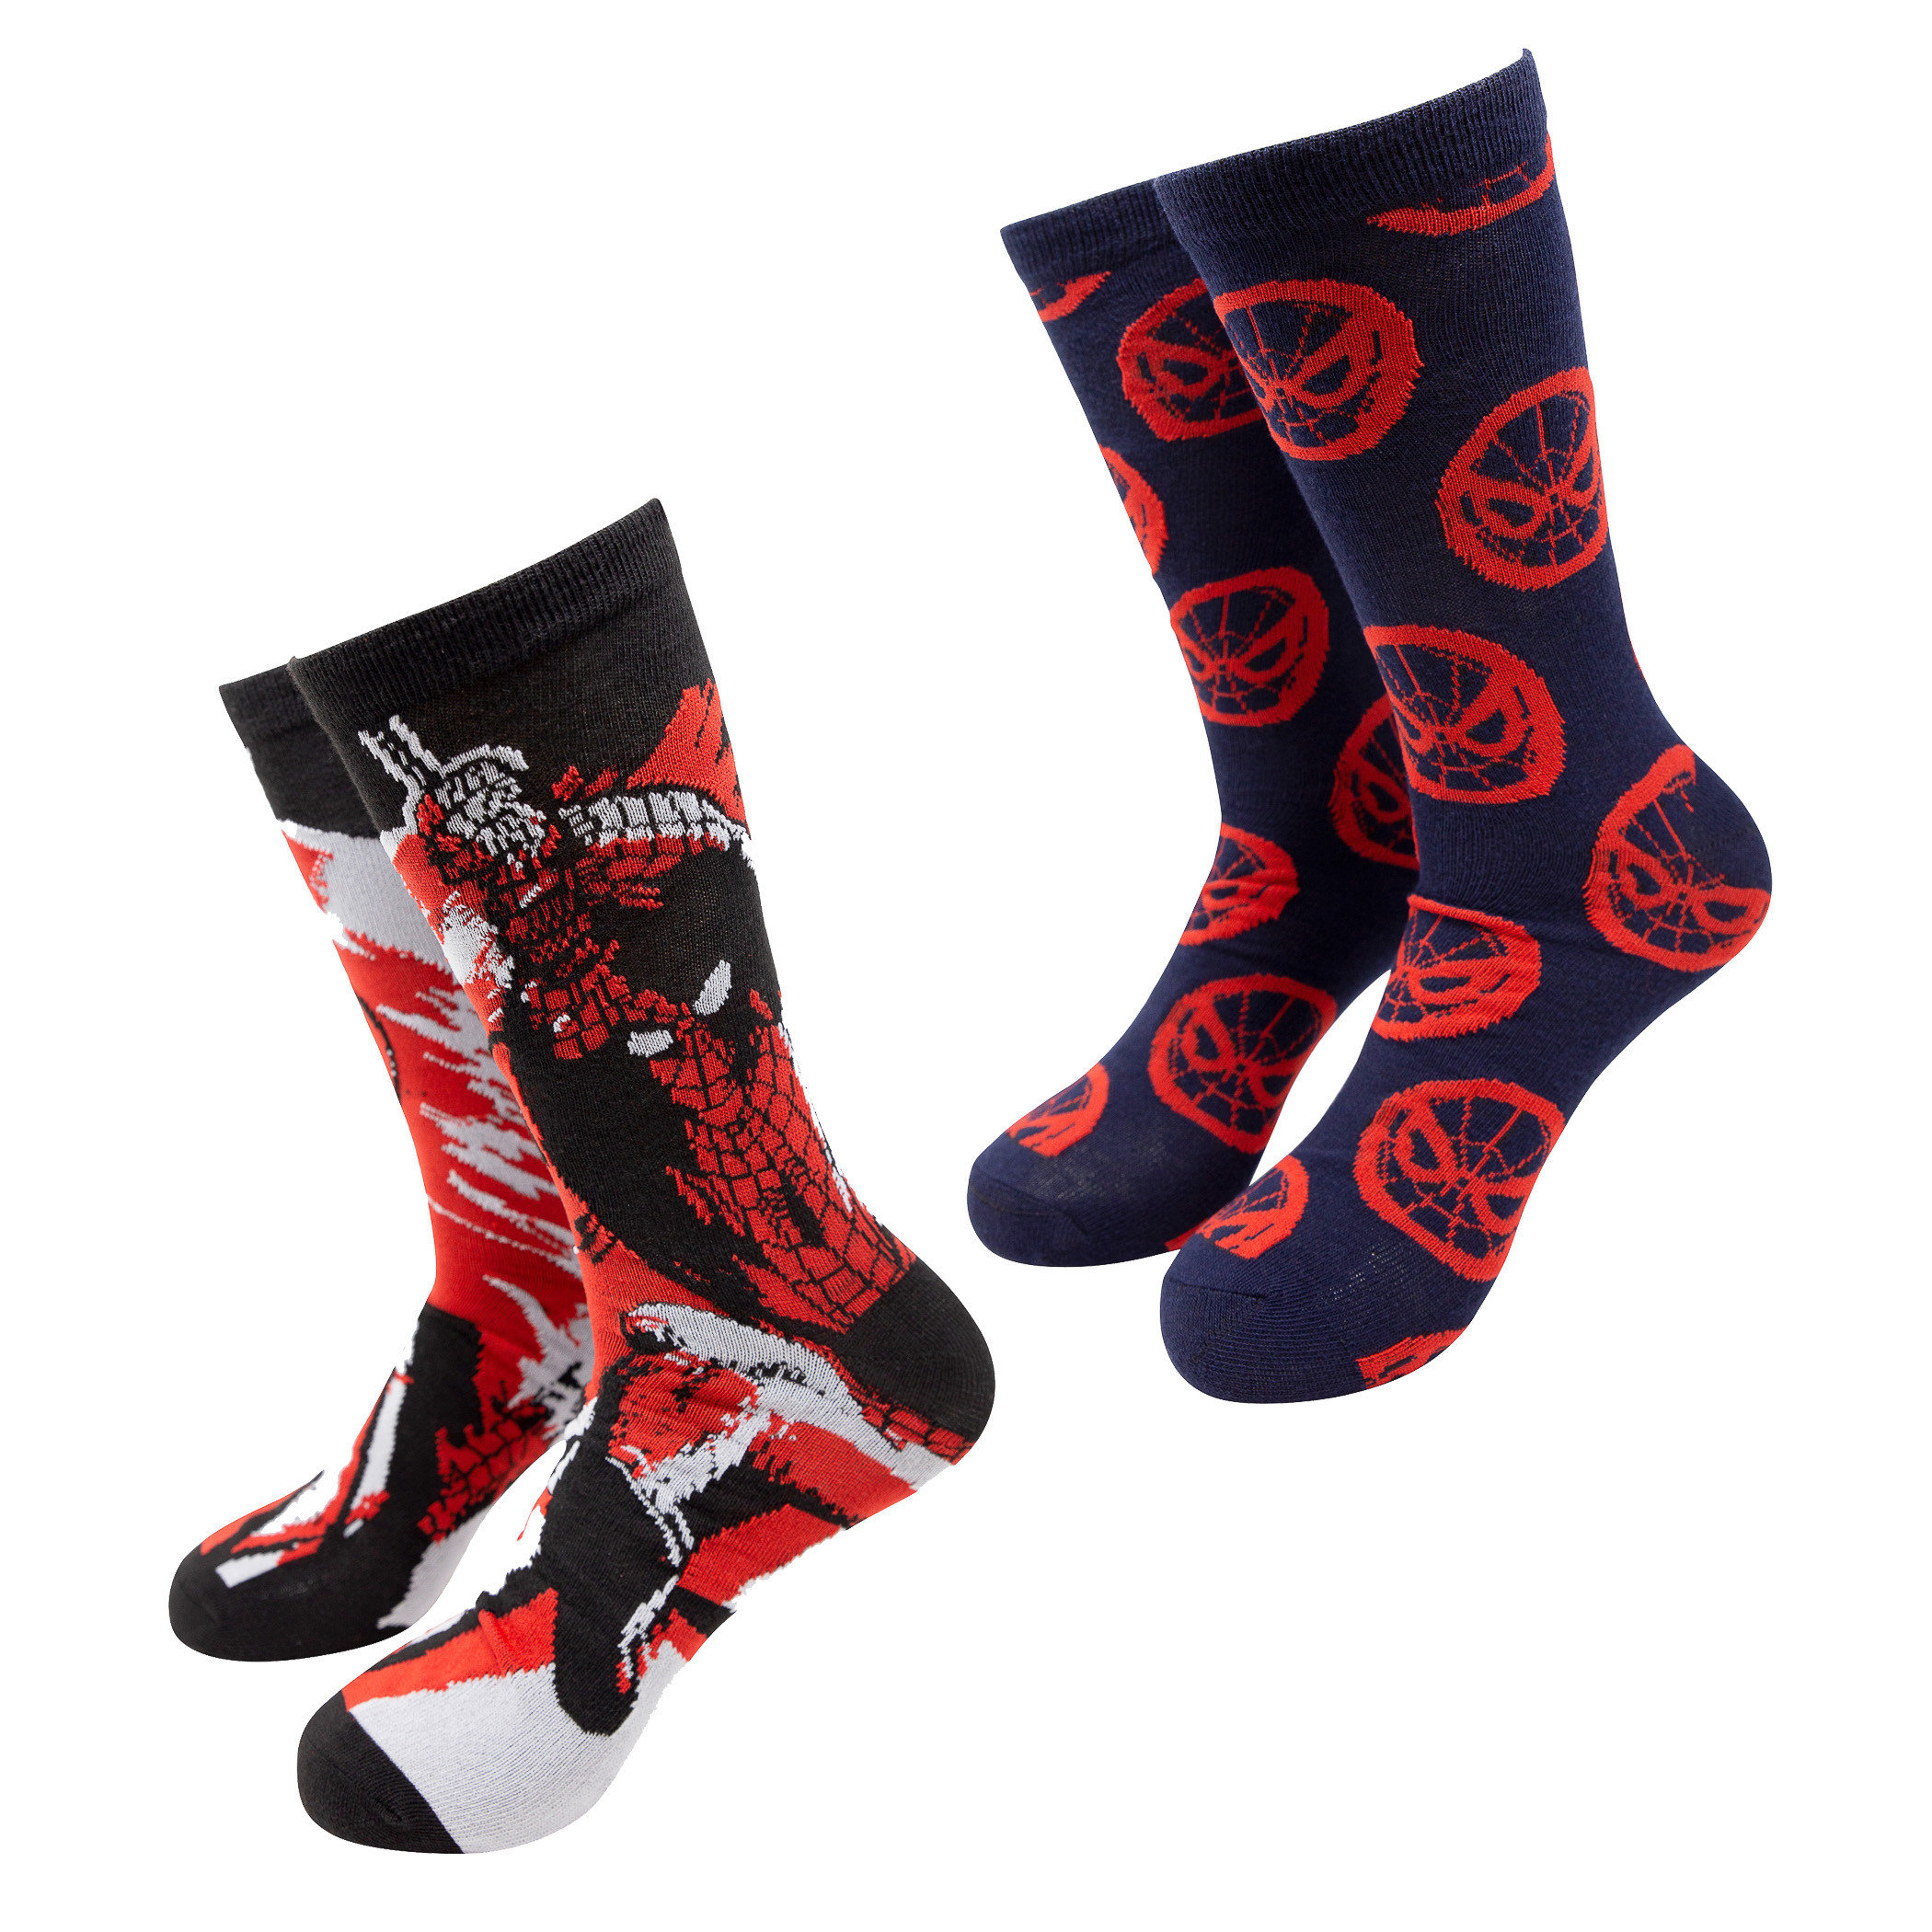 Spider-Man Swinging Black and Red Socks 2-Pair Pack